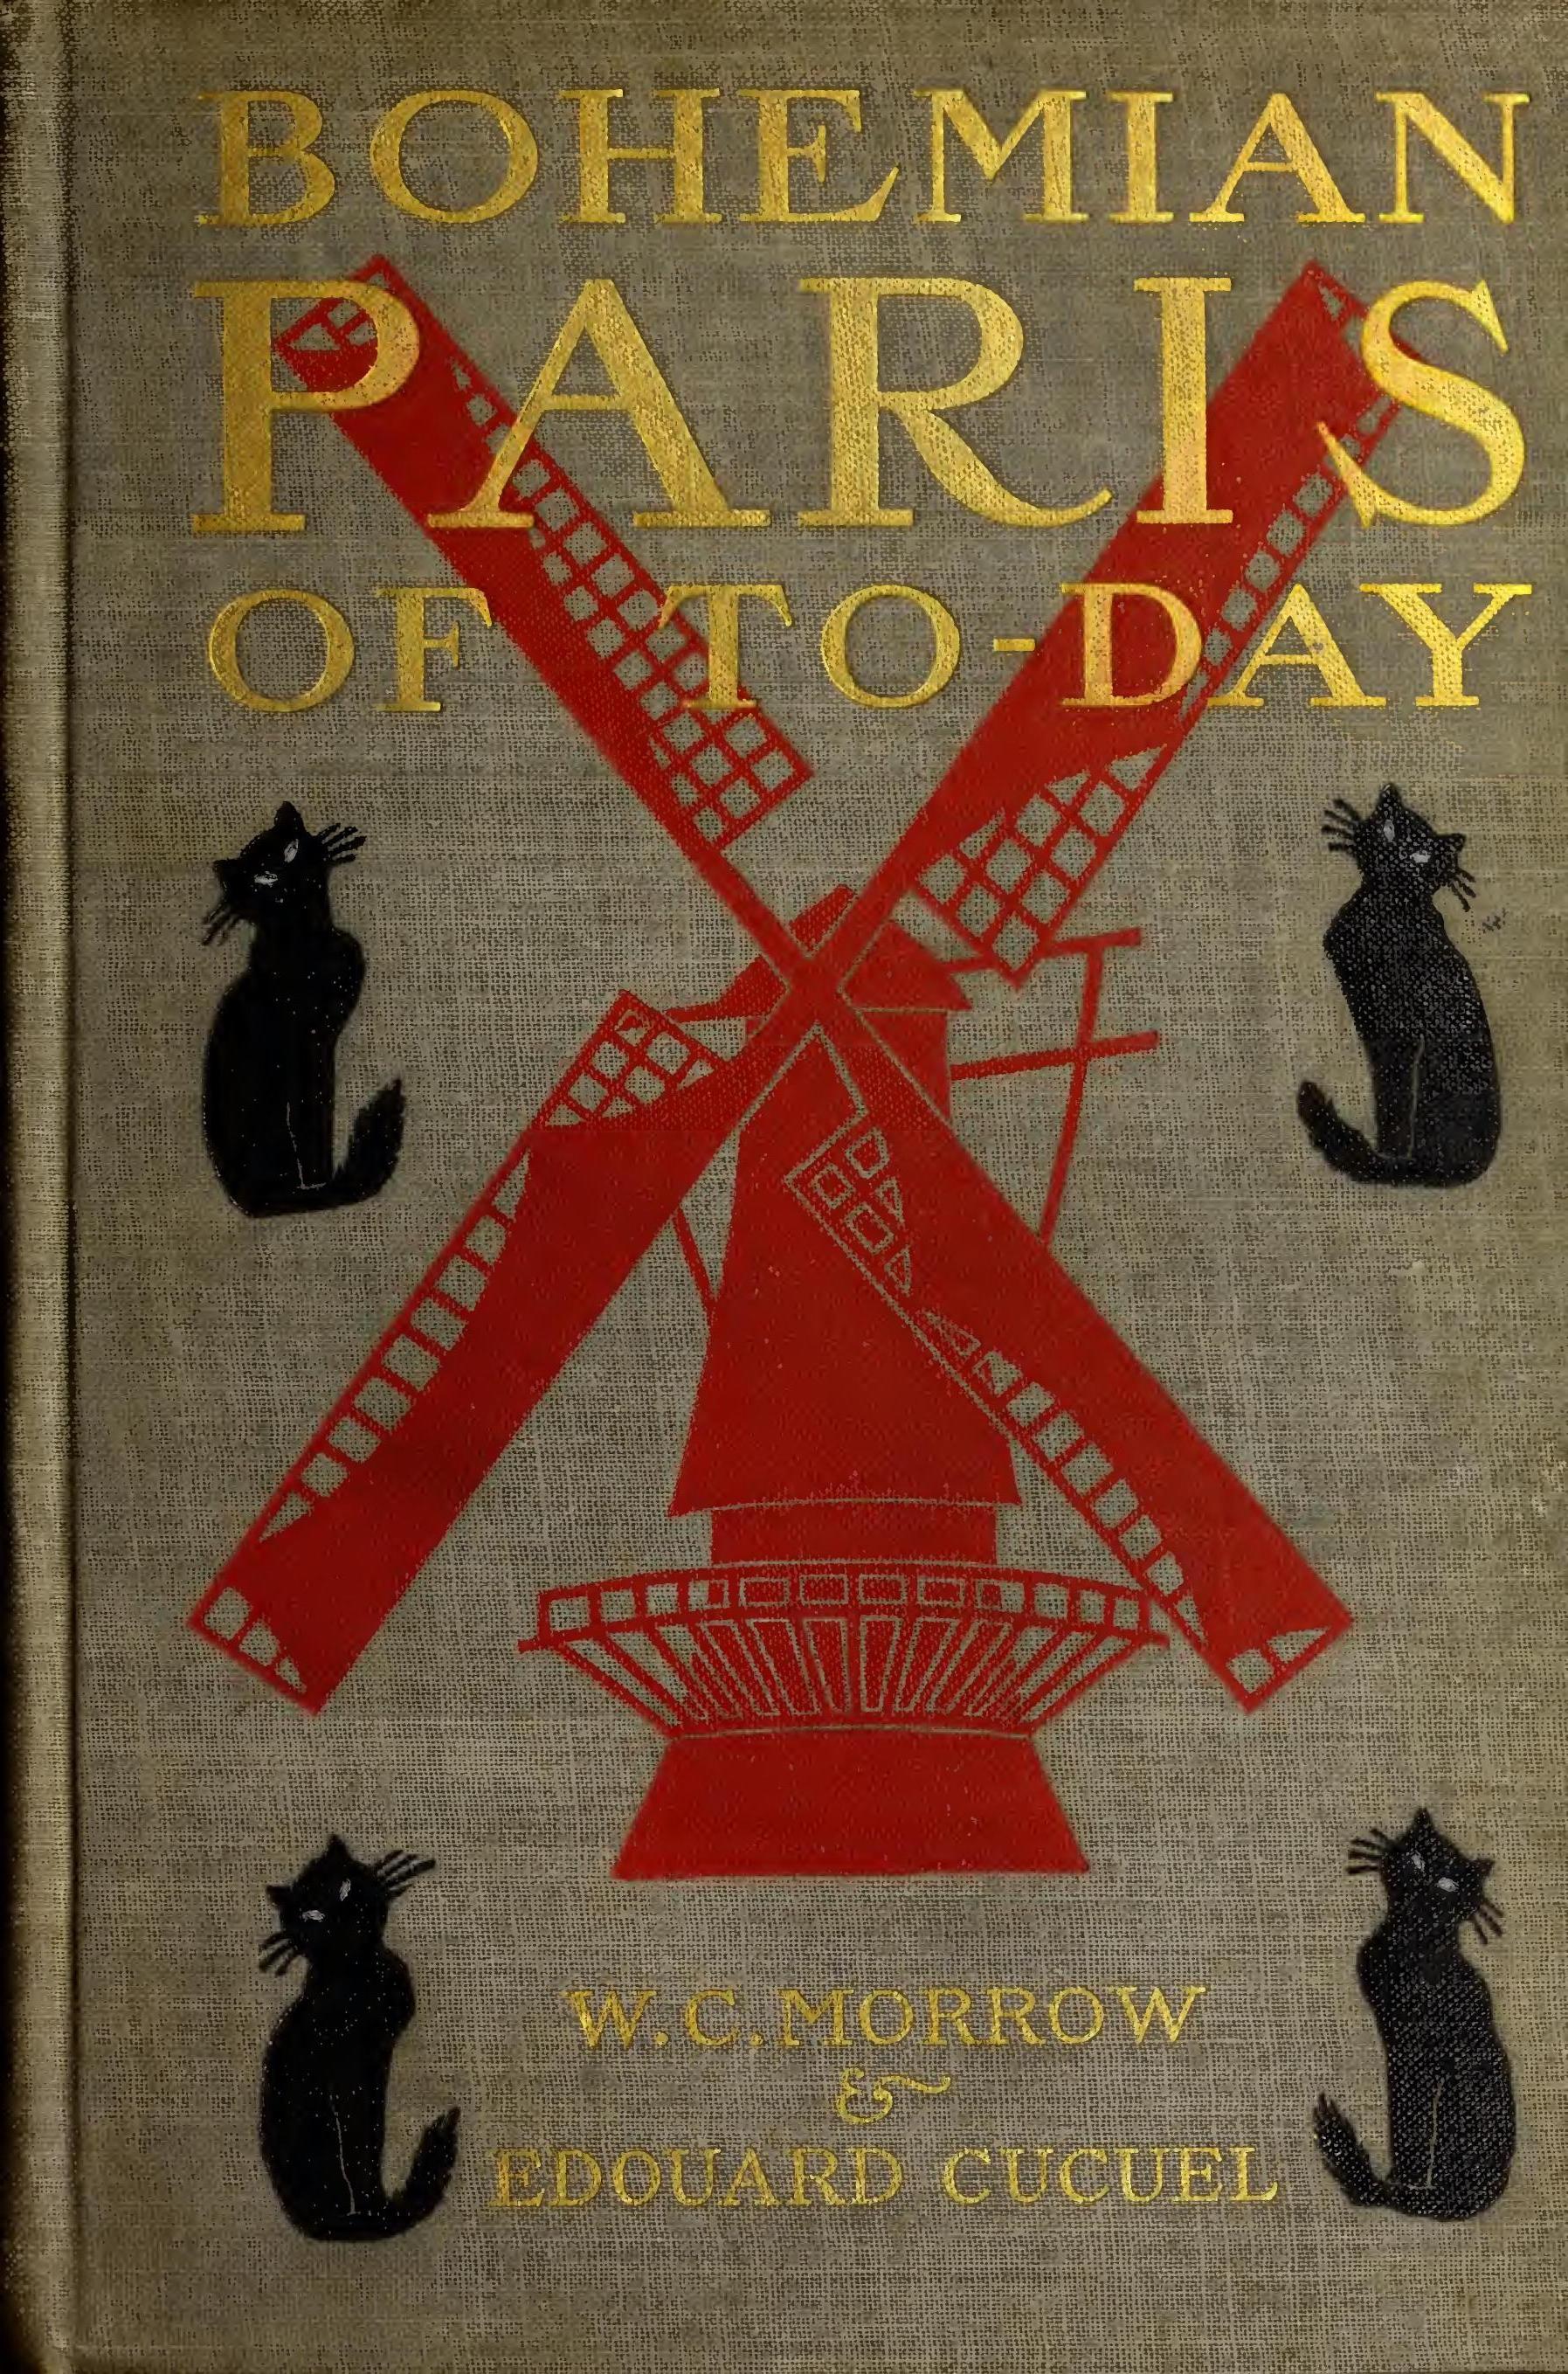 Bohemian Paris of To-day, by W. C. Morrow